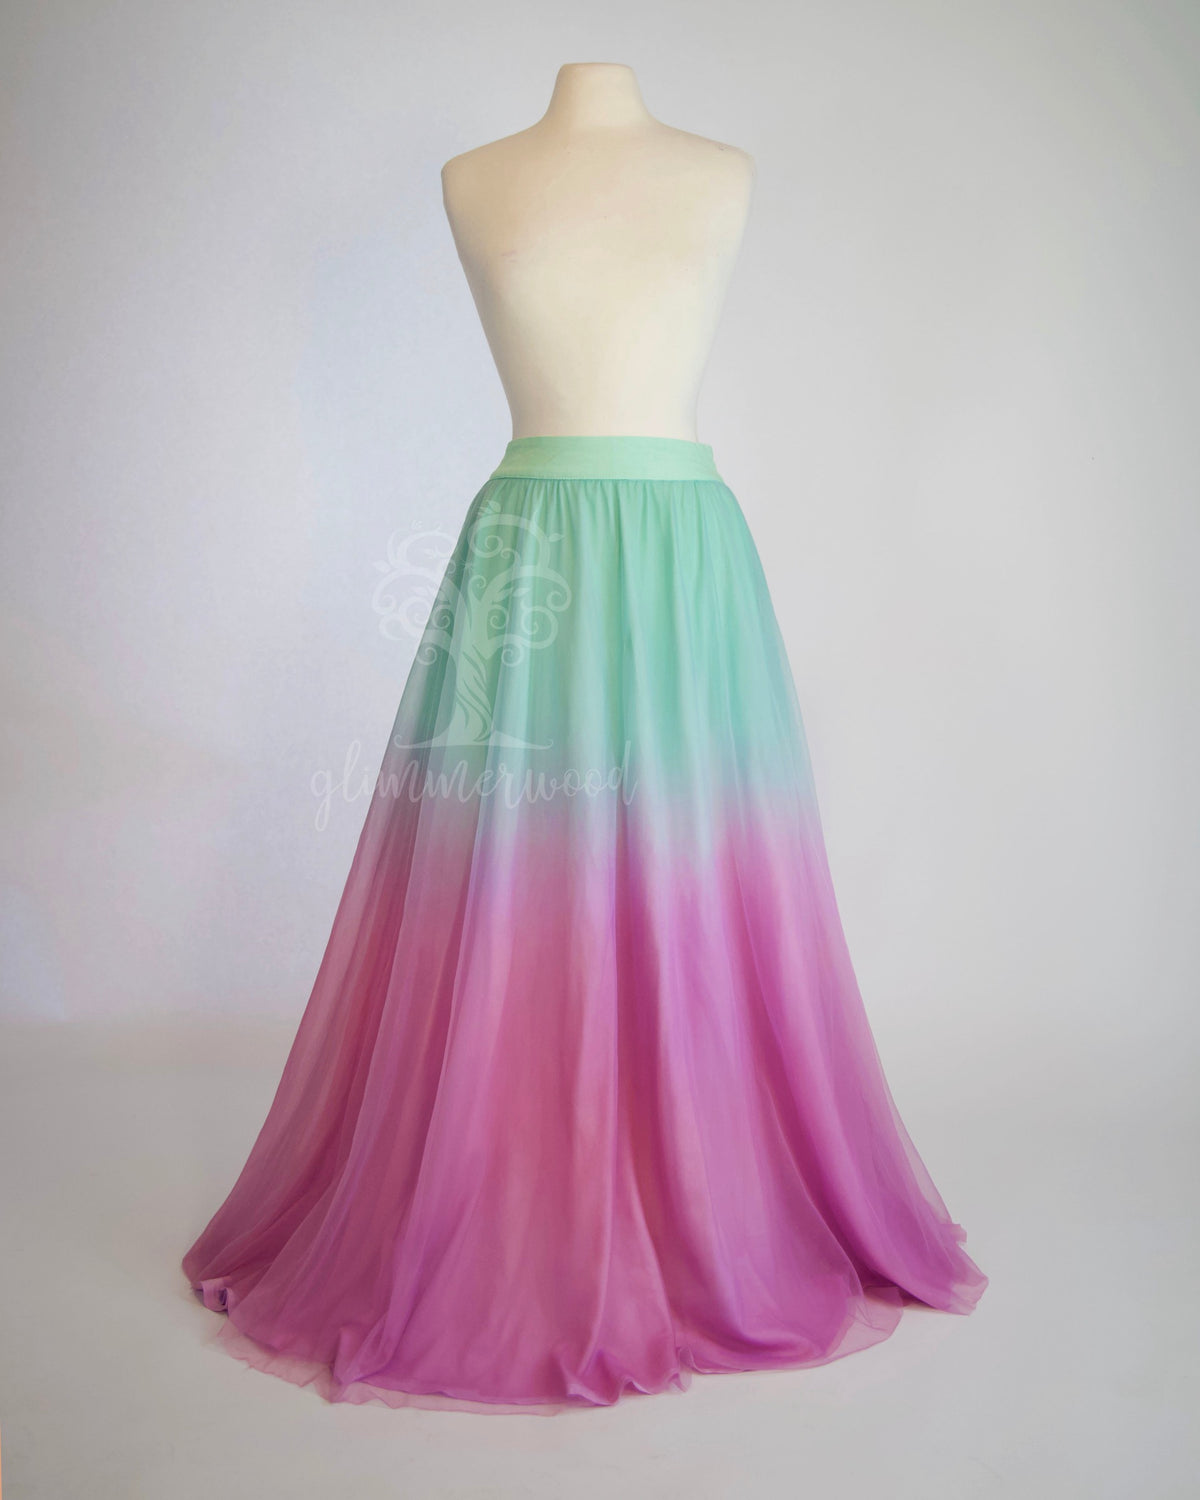 Fantasy Skirt (Made to Order)